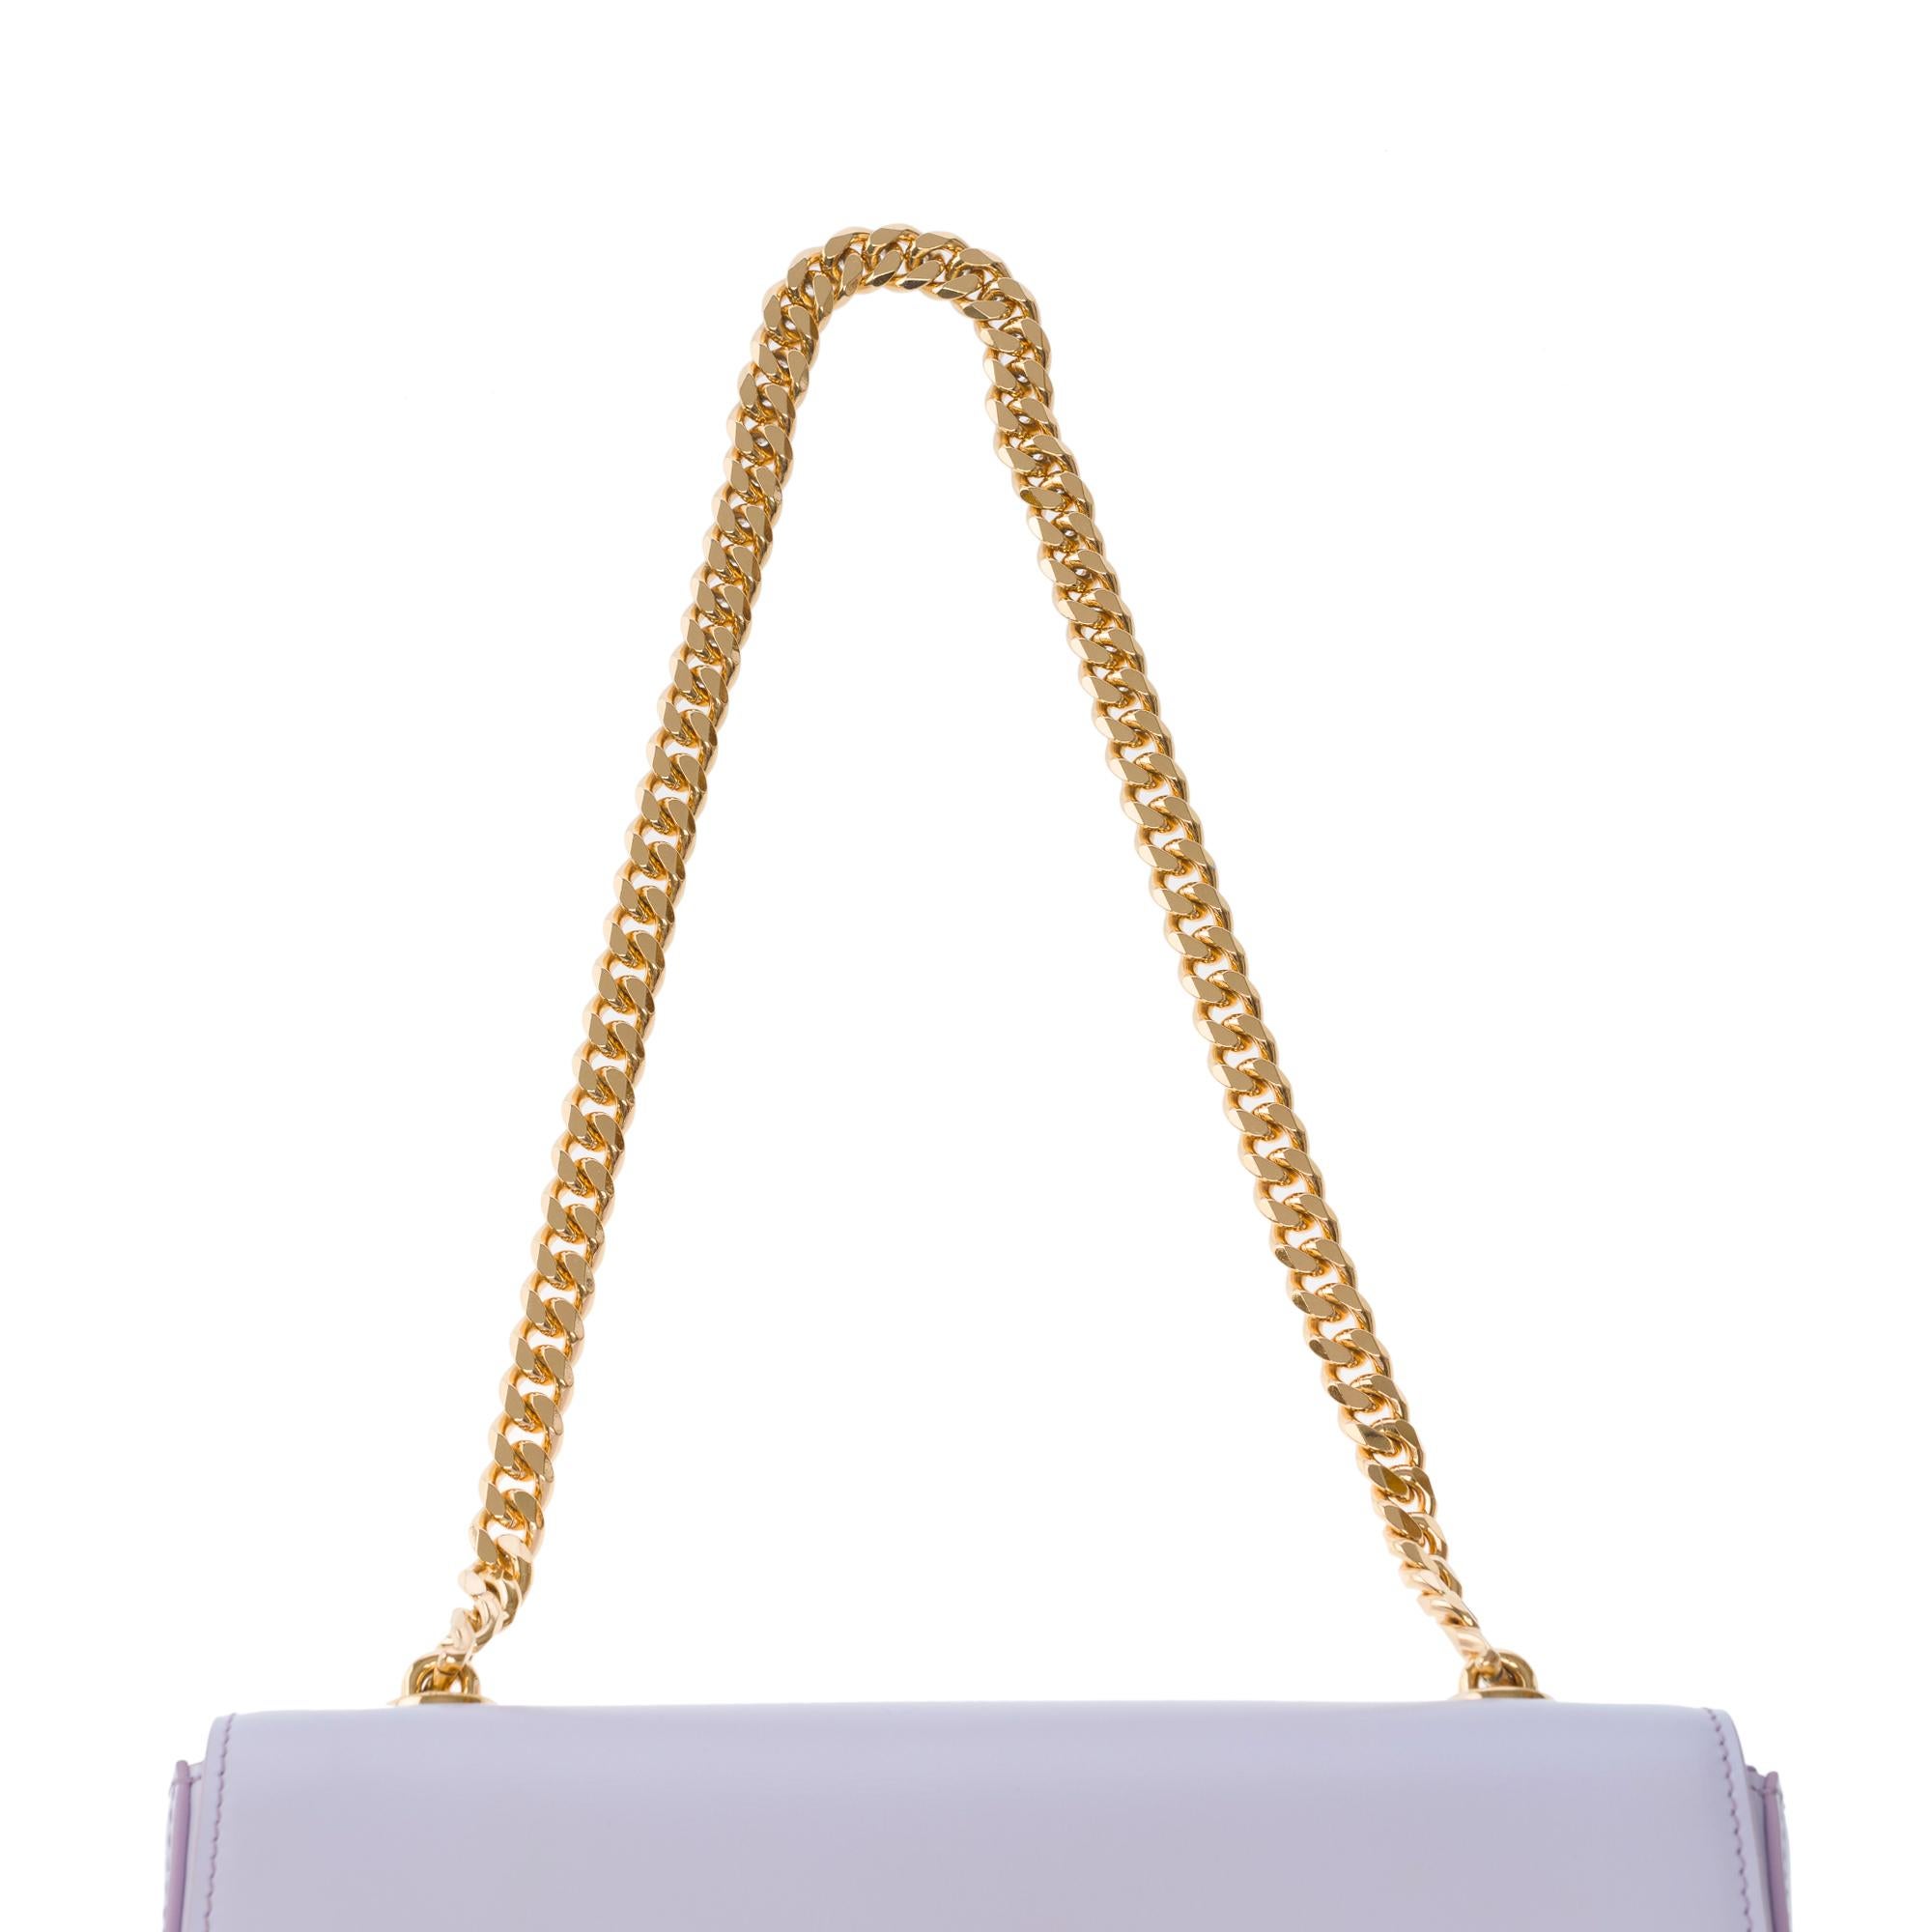 Celine Triomphe shoulder flap bag in satin lilac calf leather, GHW For Sale 5